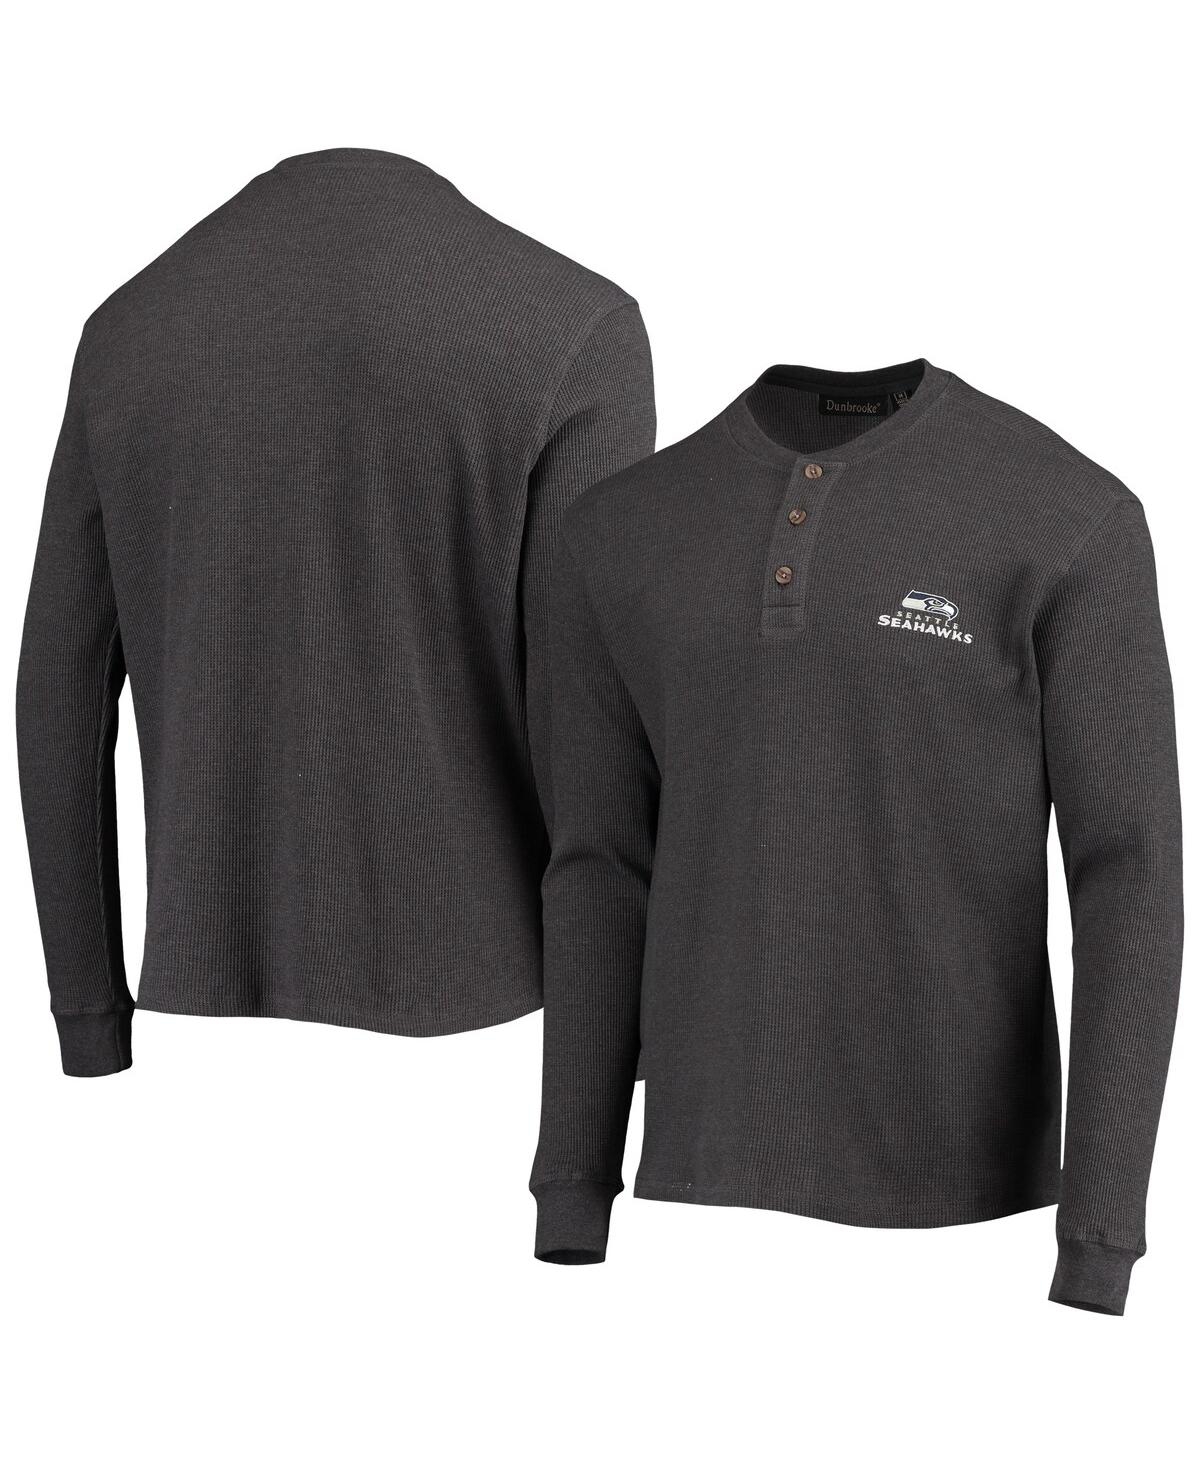 Shop Dunbrooke Men's  Heathered Gray Seattle Seahawks Logo Maverick Thermal Henley Long Sleeve T-shirt